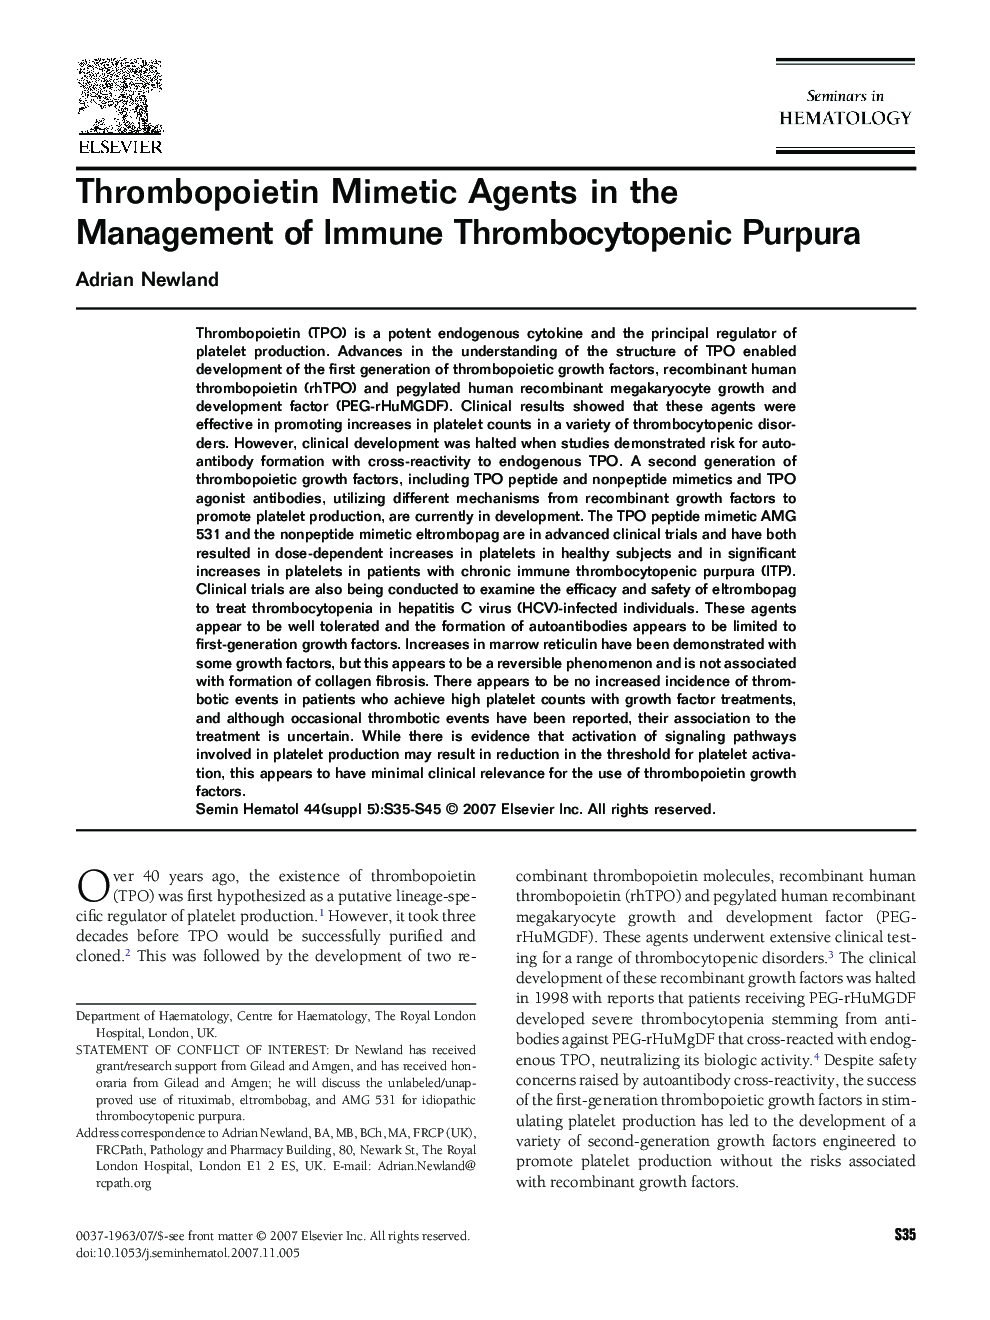 Thrombopoietin Mimetic Agents in the Management of Immune Thrombocytopenic Purpura 